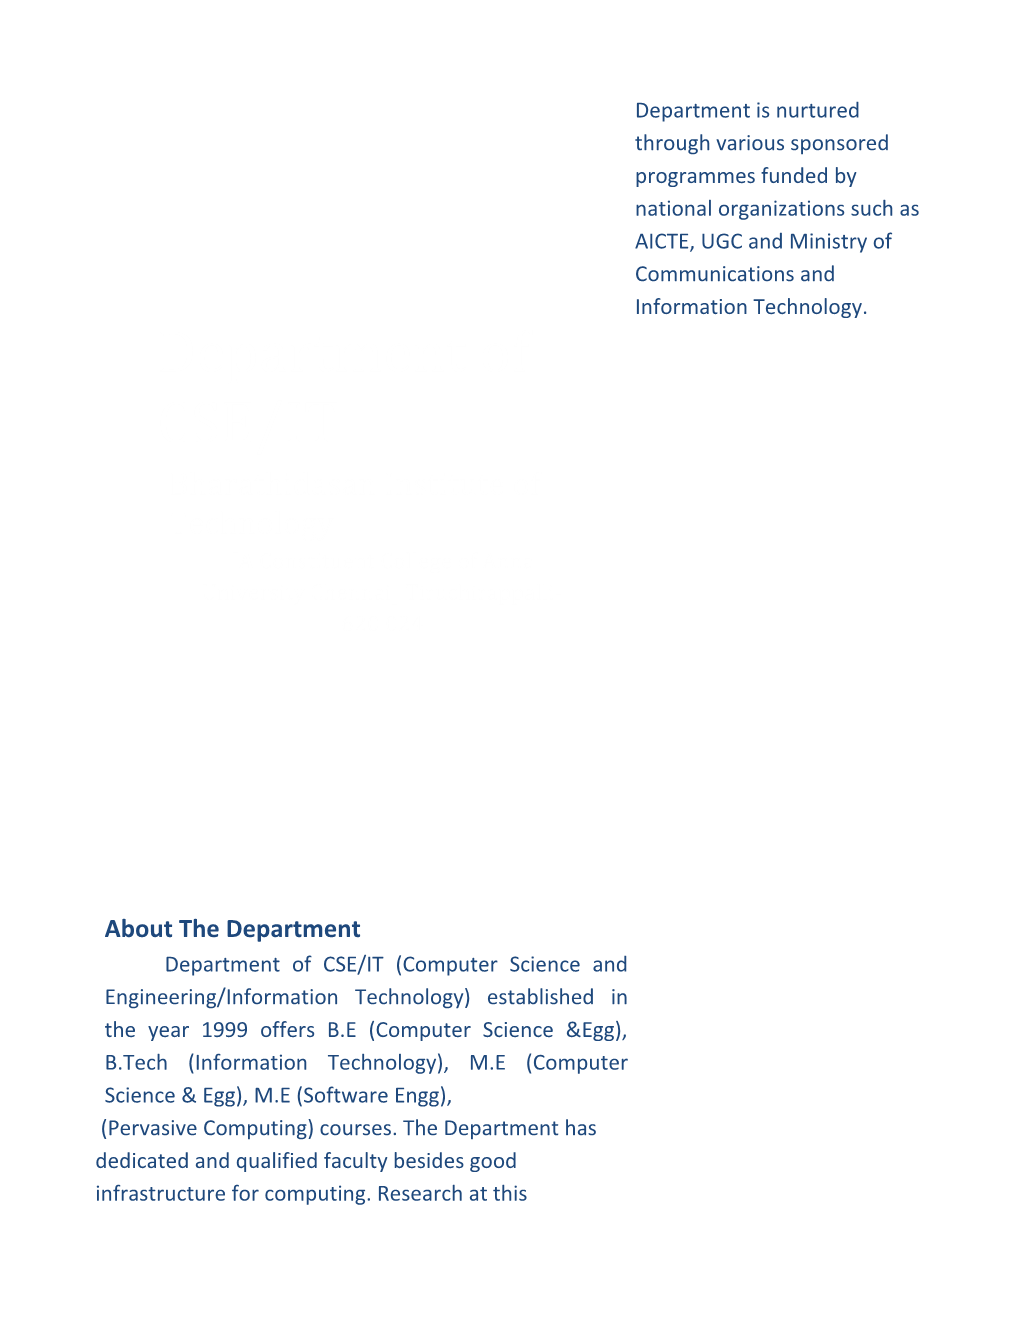 BIT- CSE/IT Department Newsletter Volume:V Issue:I (January-March,2014)